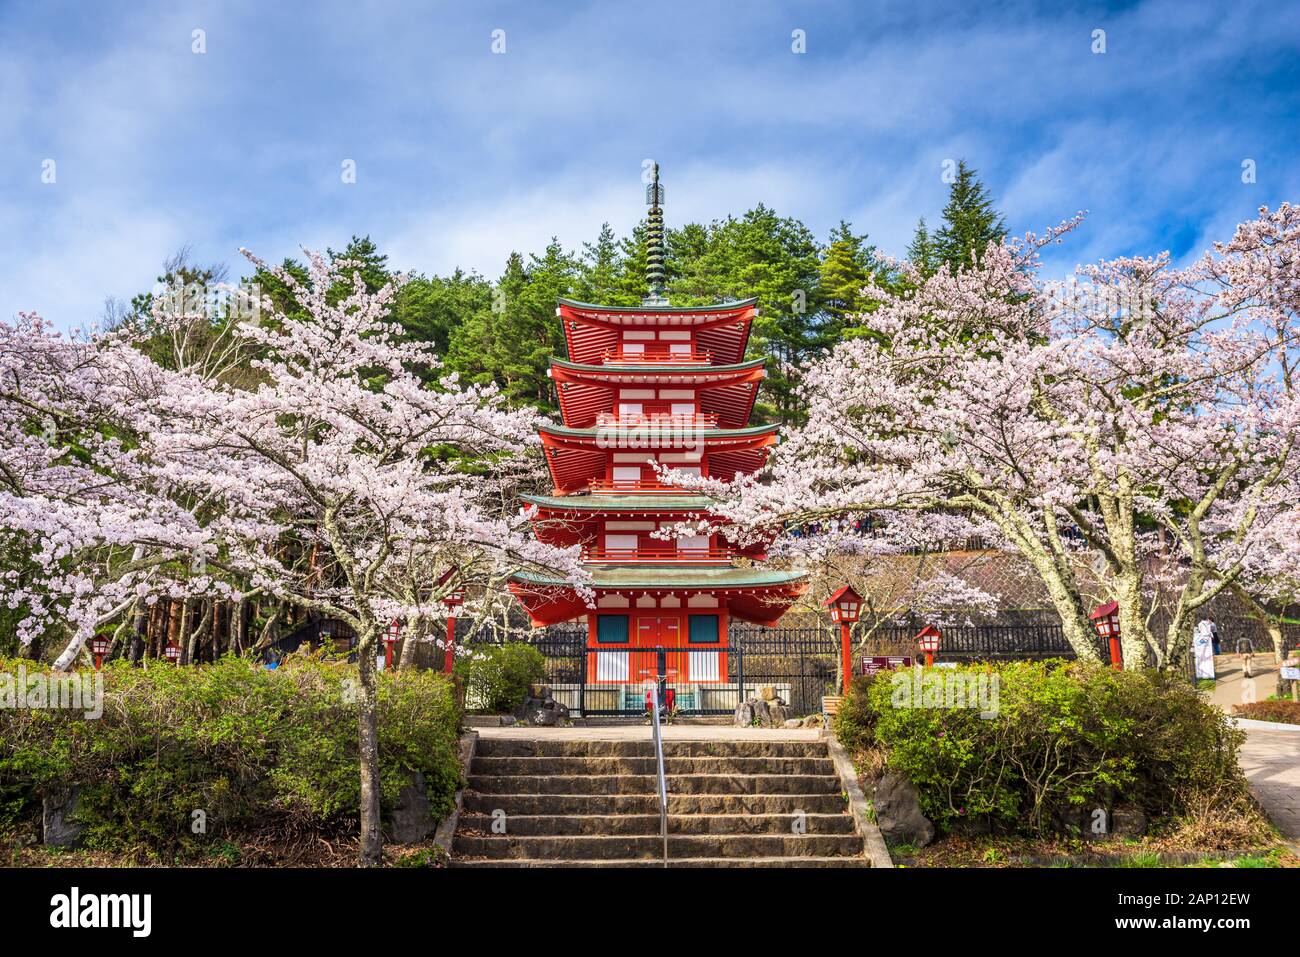 Fujiyoshida, Japan at Chureito Pagoda in Arakurayama Sengen Park during spring cherry blossom season. Stock Photo